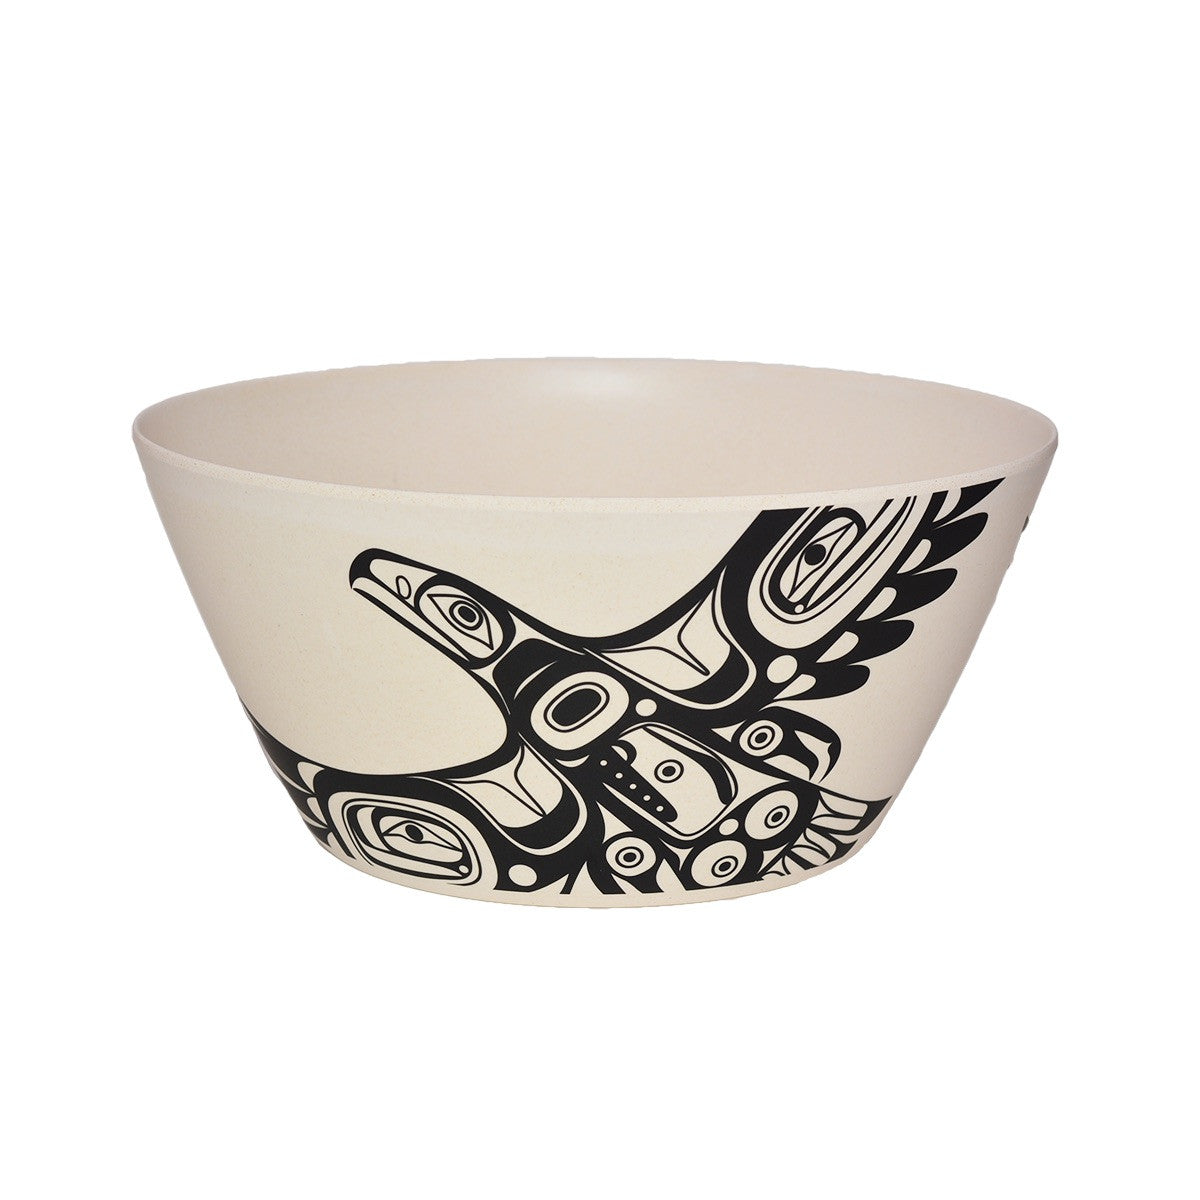 10” Organic Bamboo Bowl - “Soaring Eagle” by Corey Bulpitt